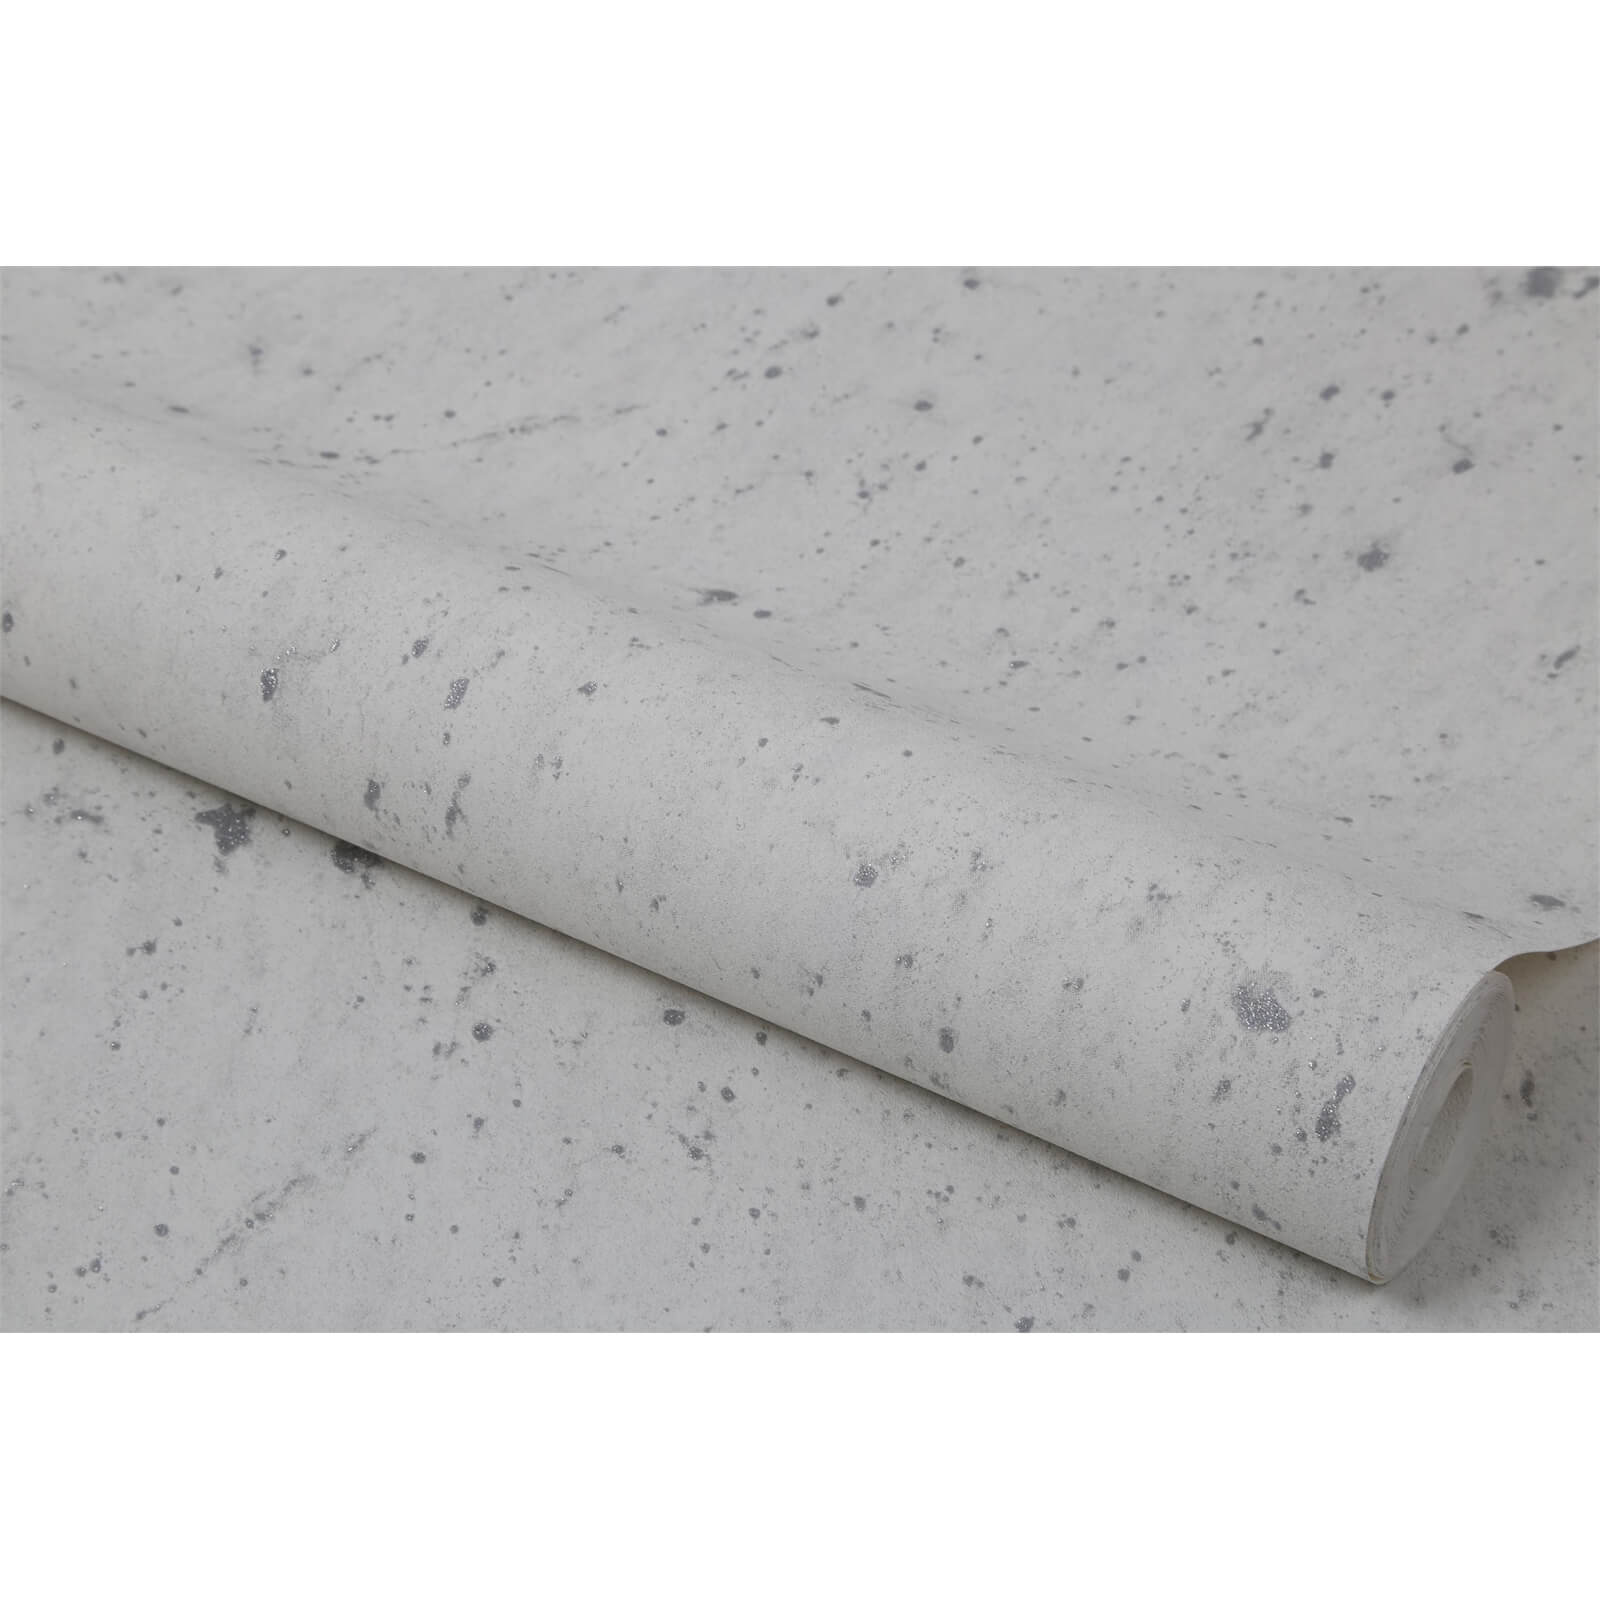 Superfresco Easy Alpine Wallpaper - White